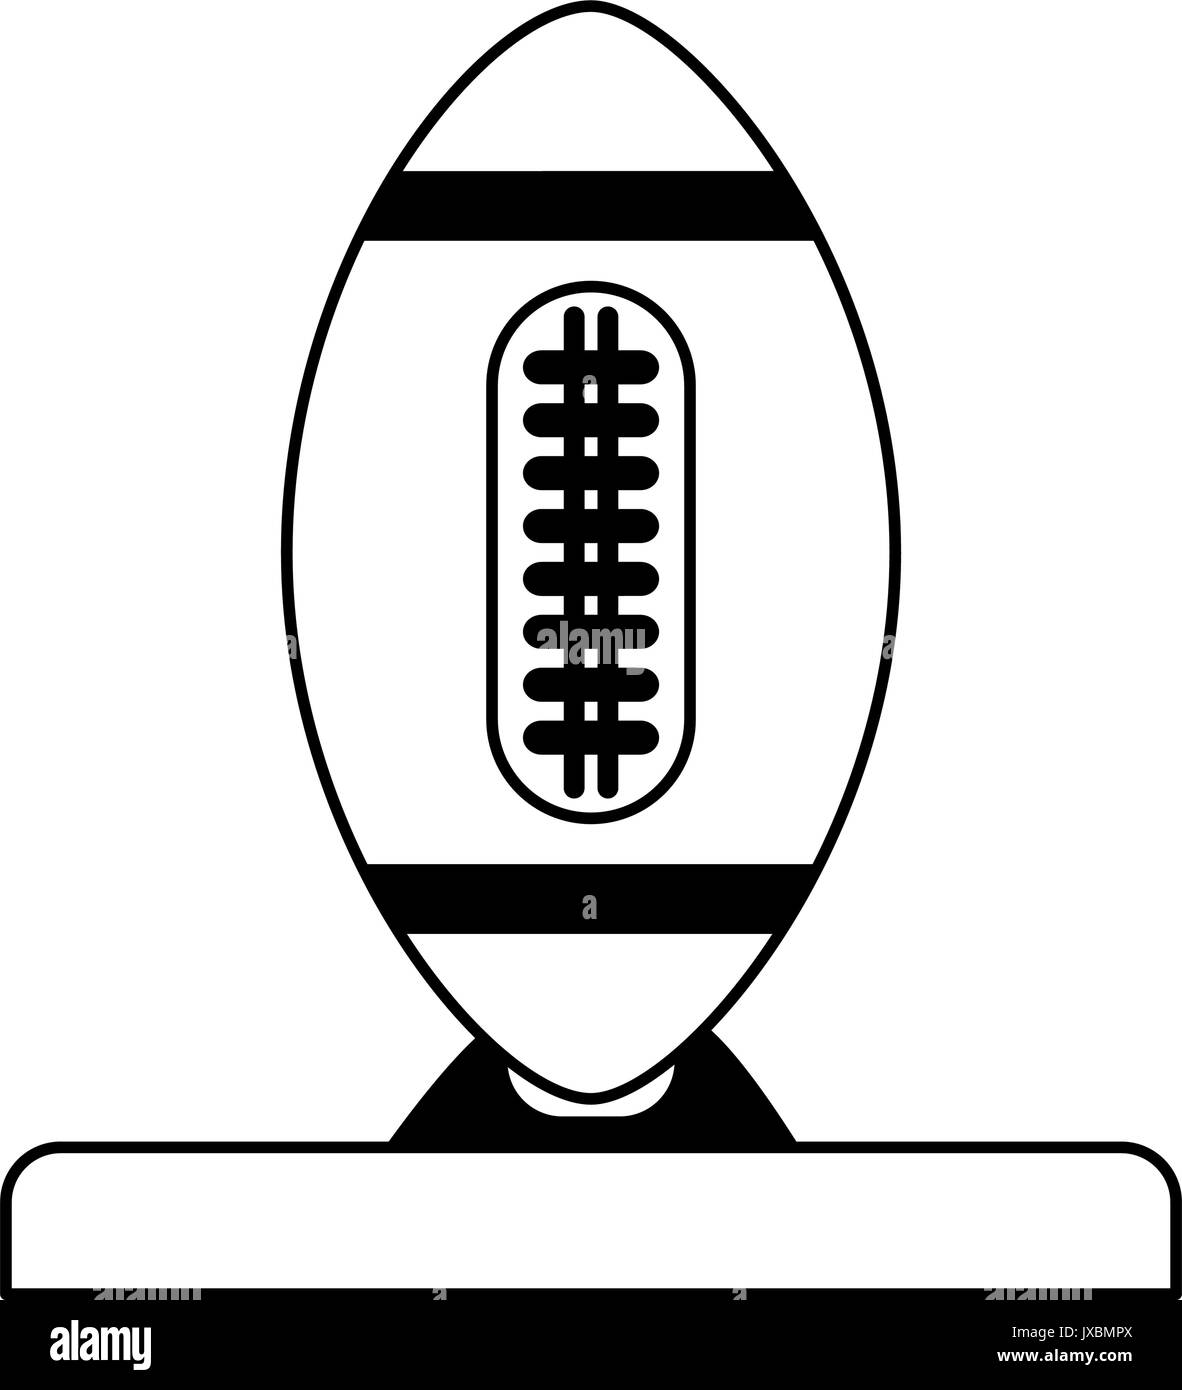 american football ball icon image  Stock Vector